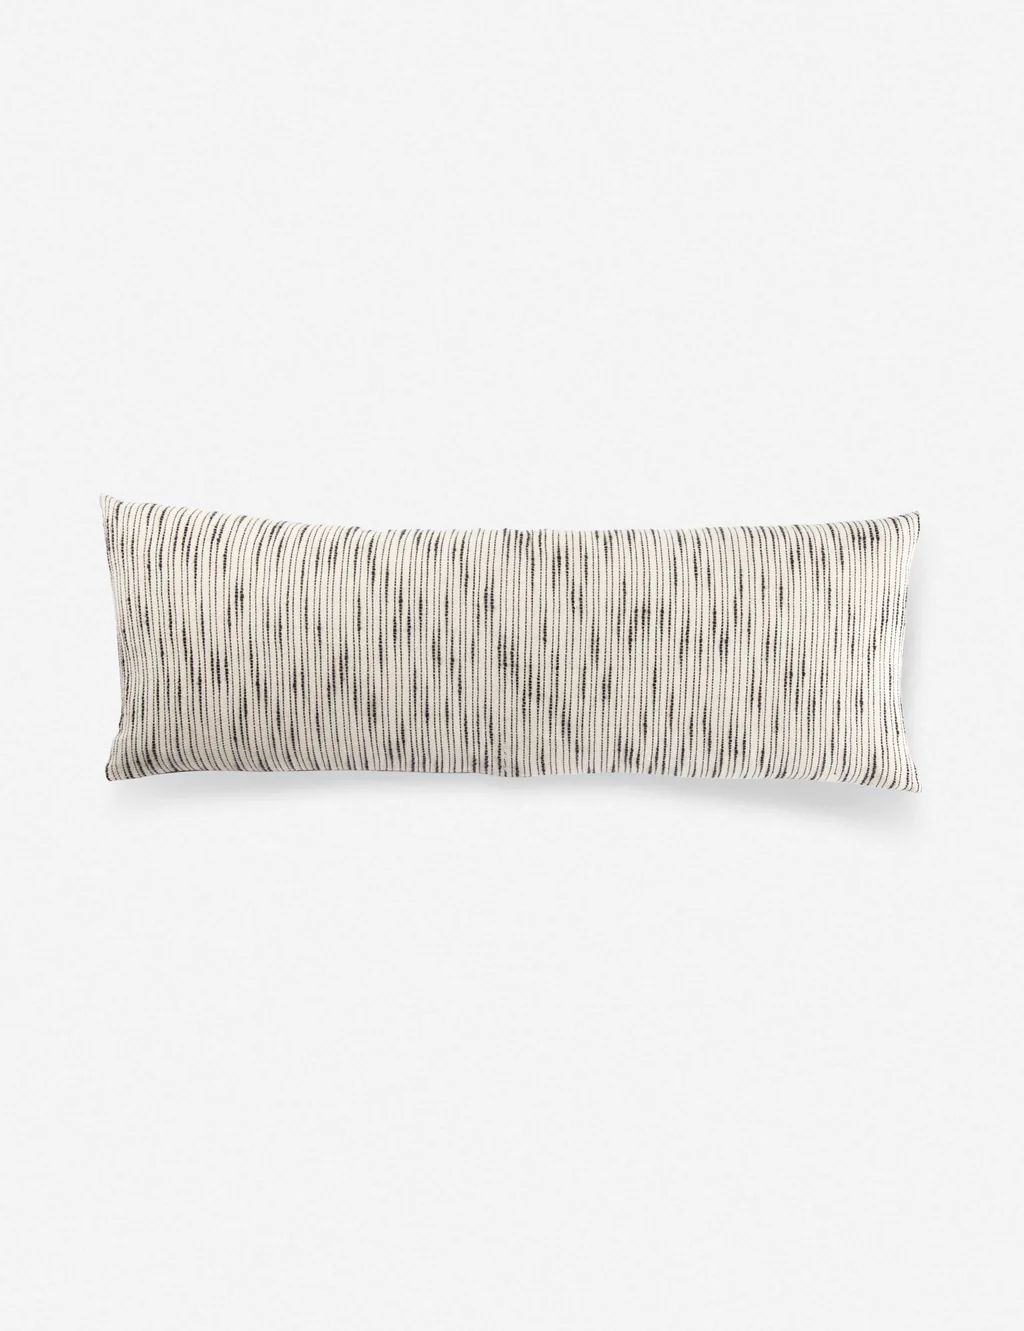 Peregrine Striped Pillow | Lulu and Georgia 